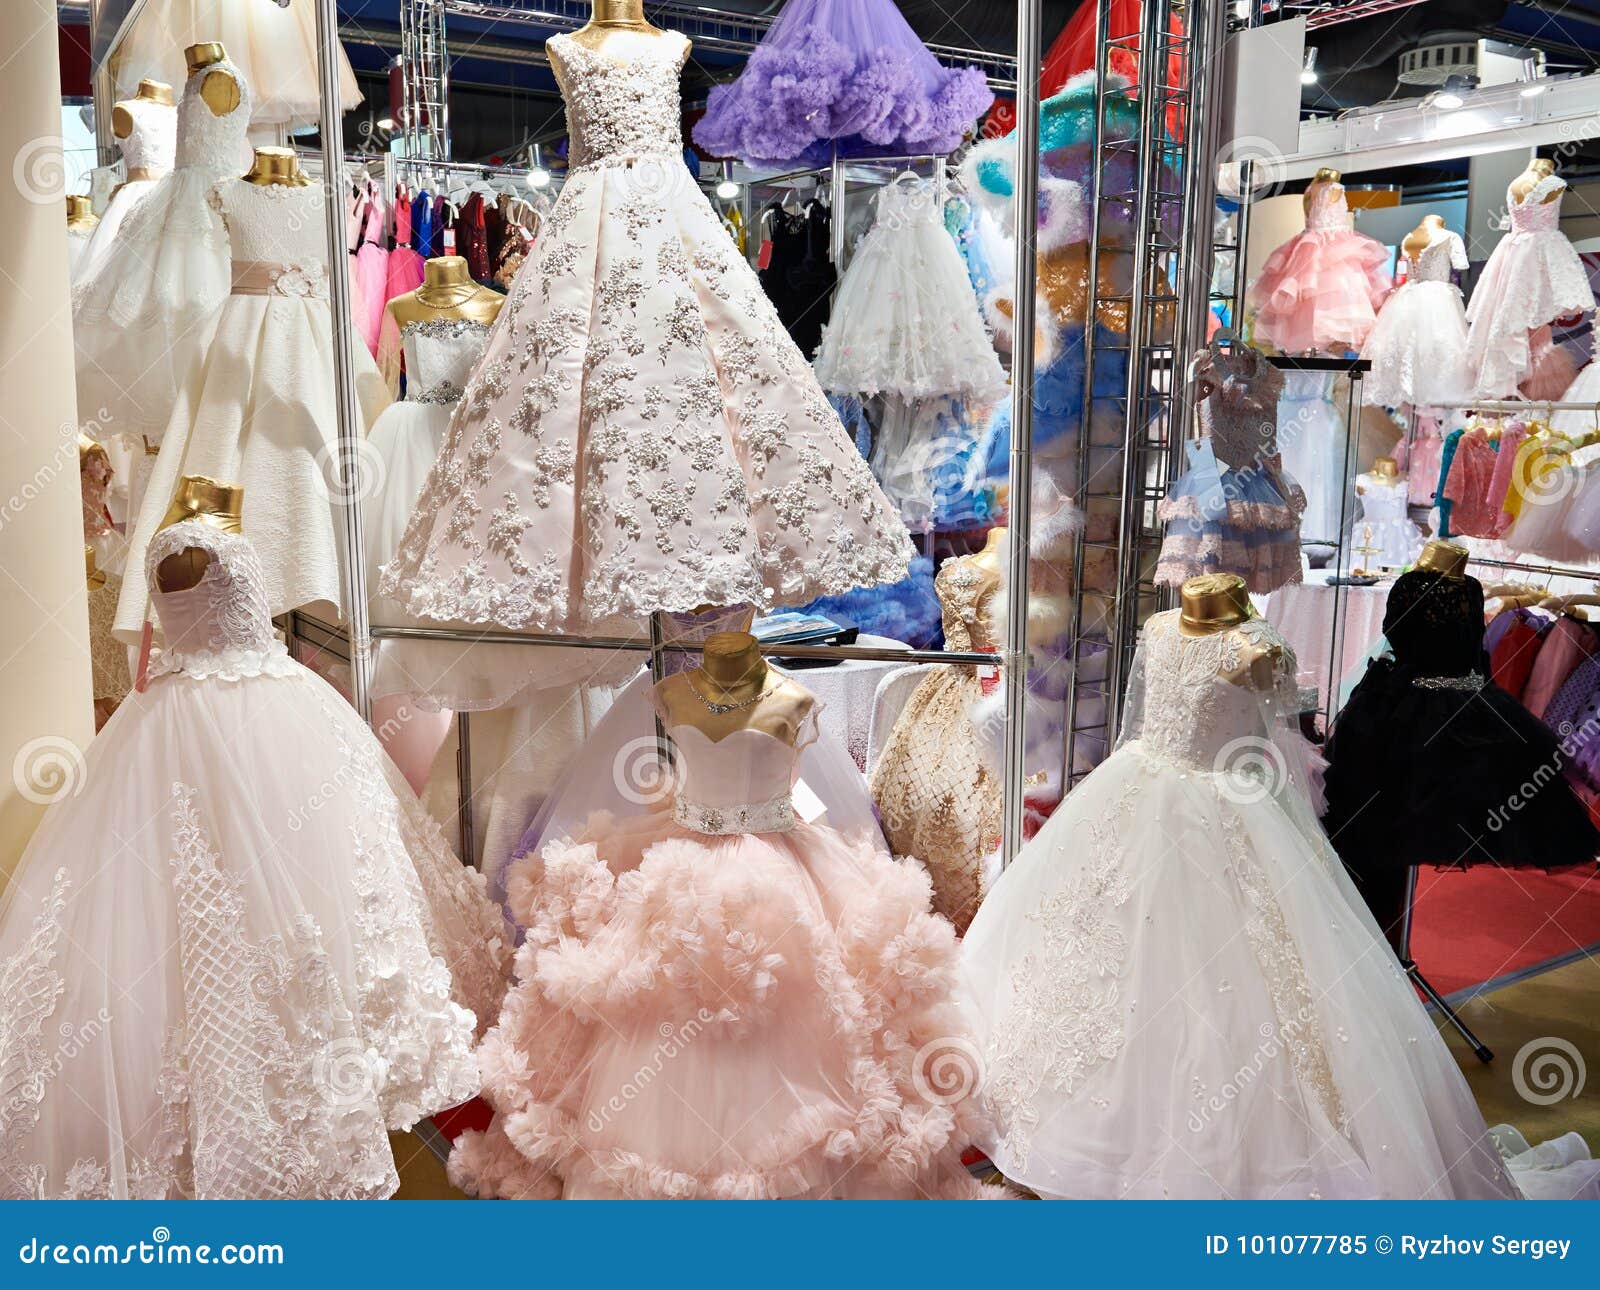 Salon of wedding dresses stock image. Image of sale - 101077785